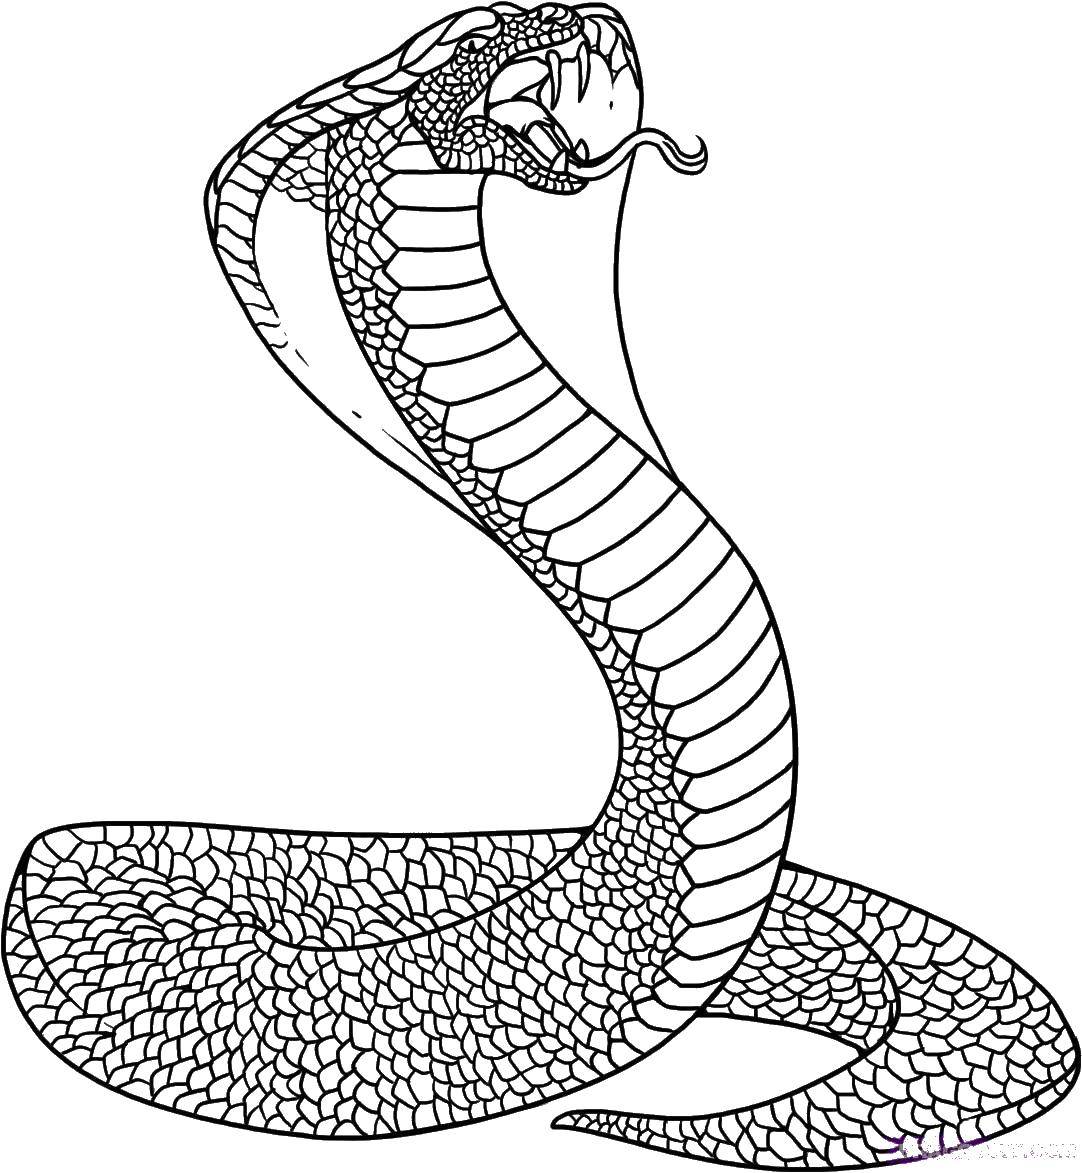 Раскраски змея  Огромная кобра